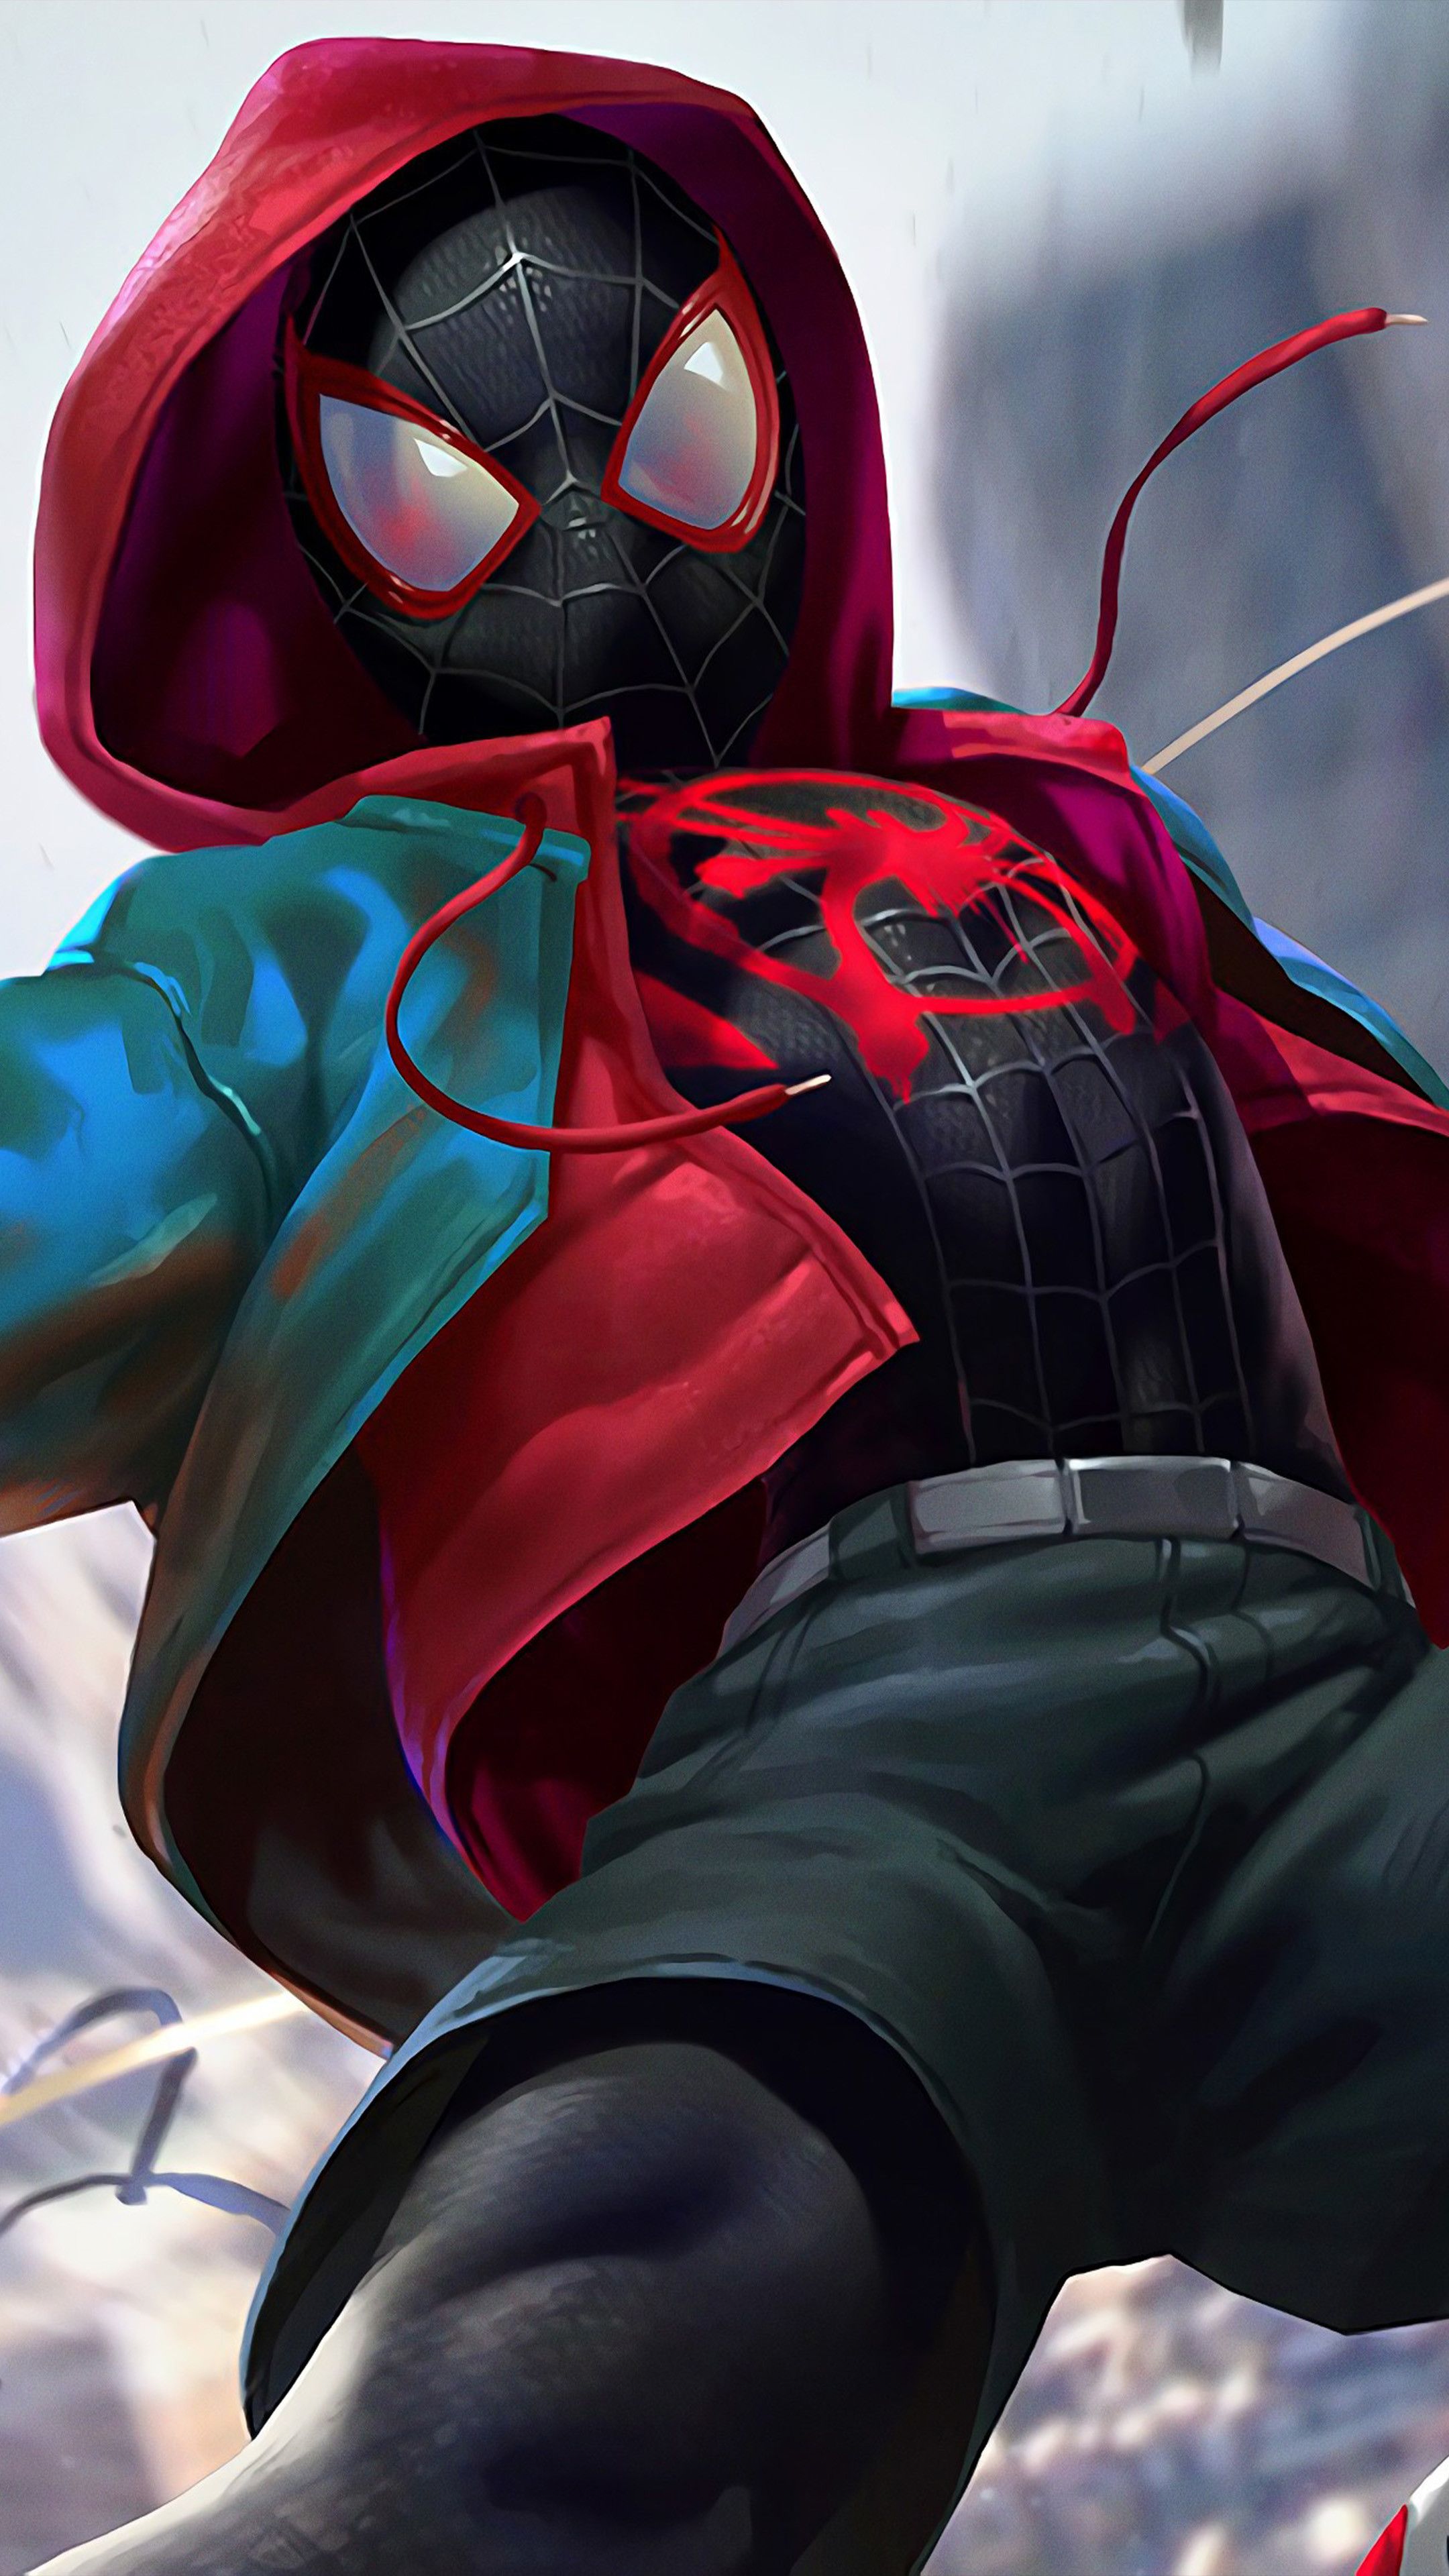 Spiderman 2018 Wallpaper